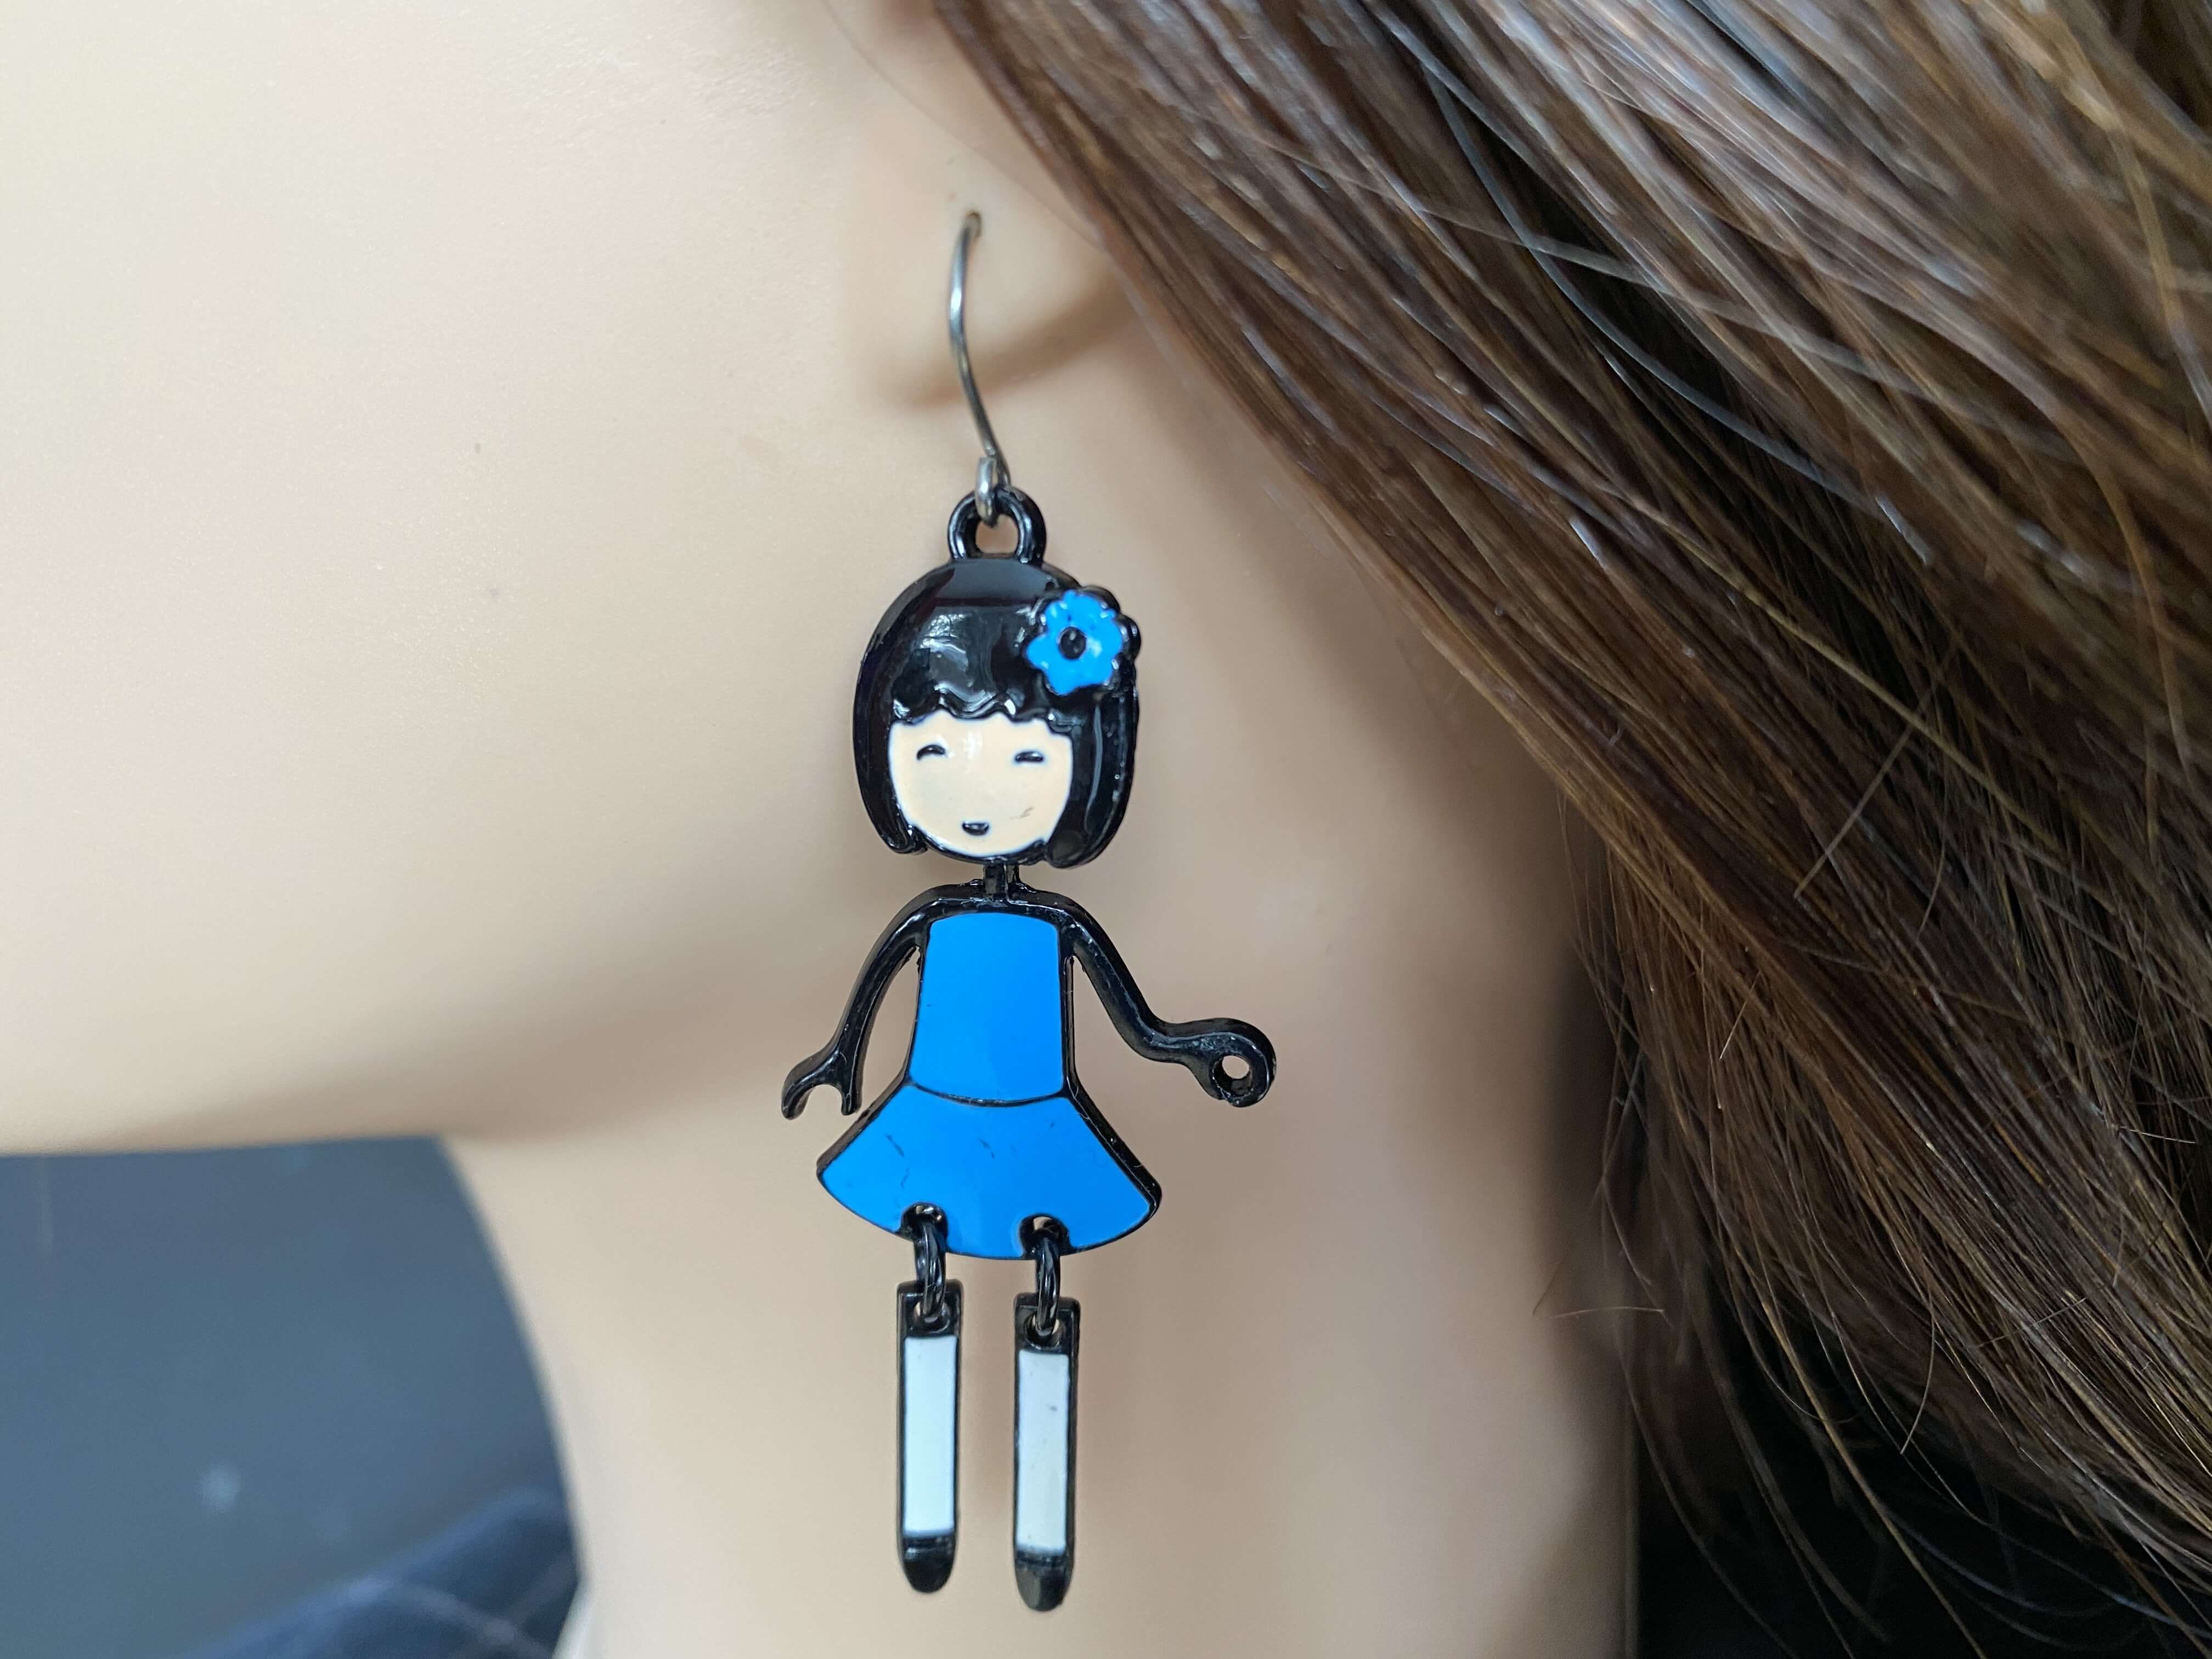 Harajuku Girl blue on ear